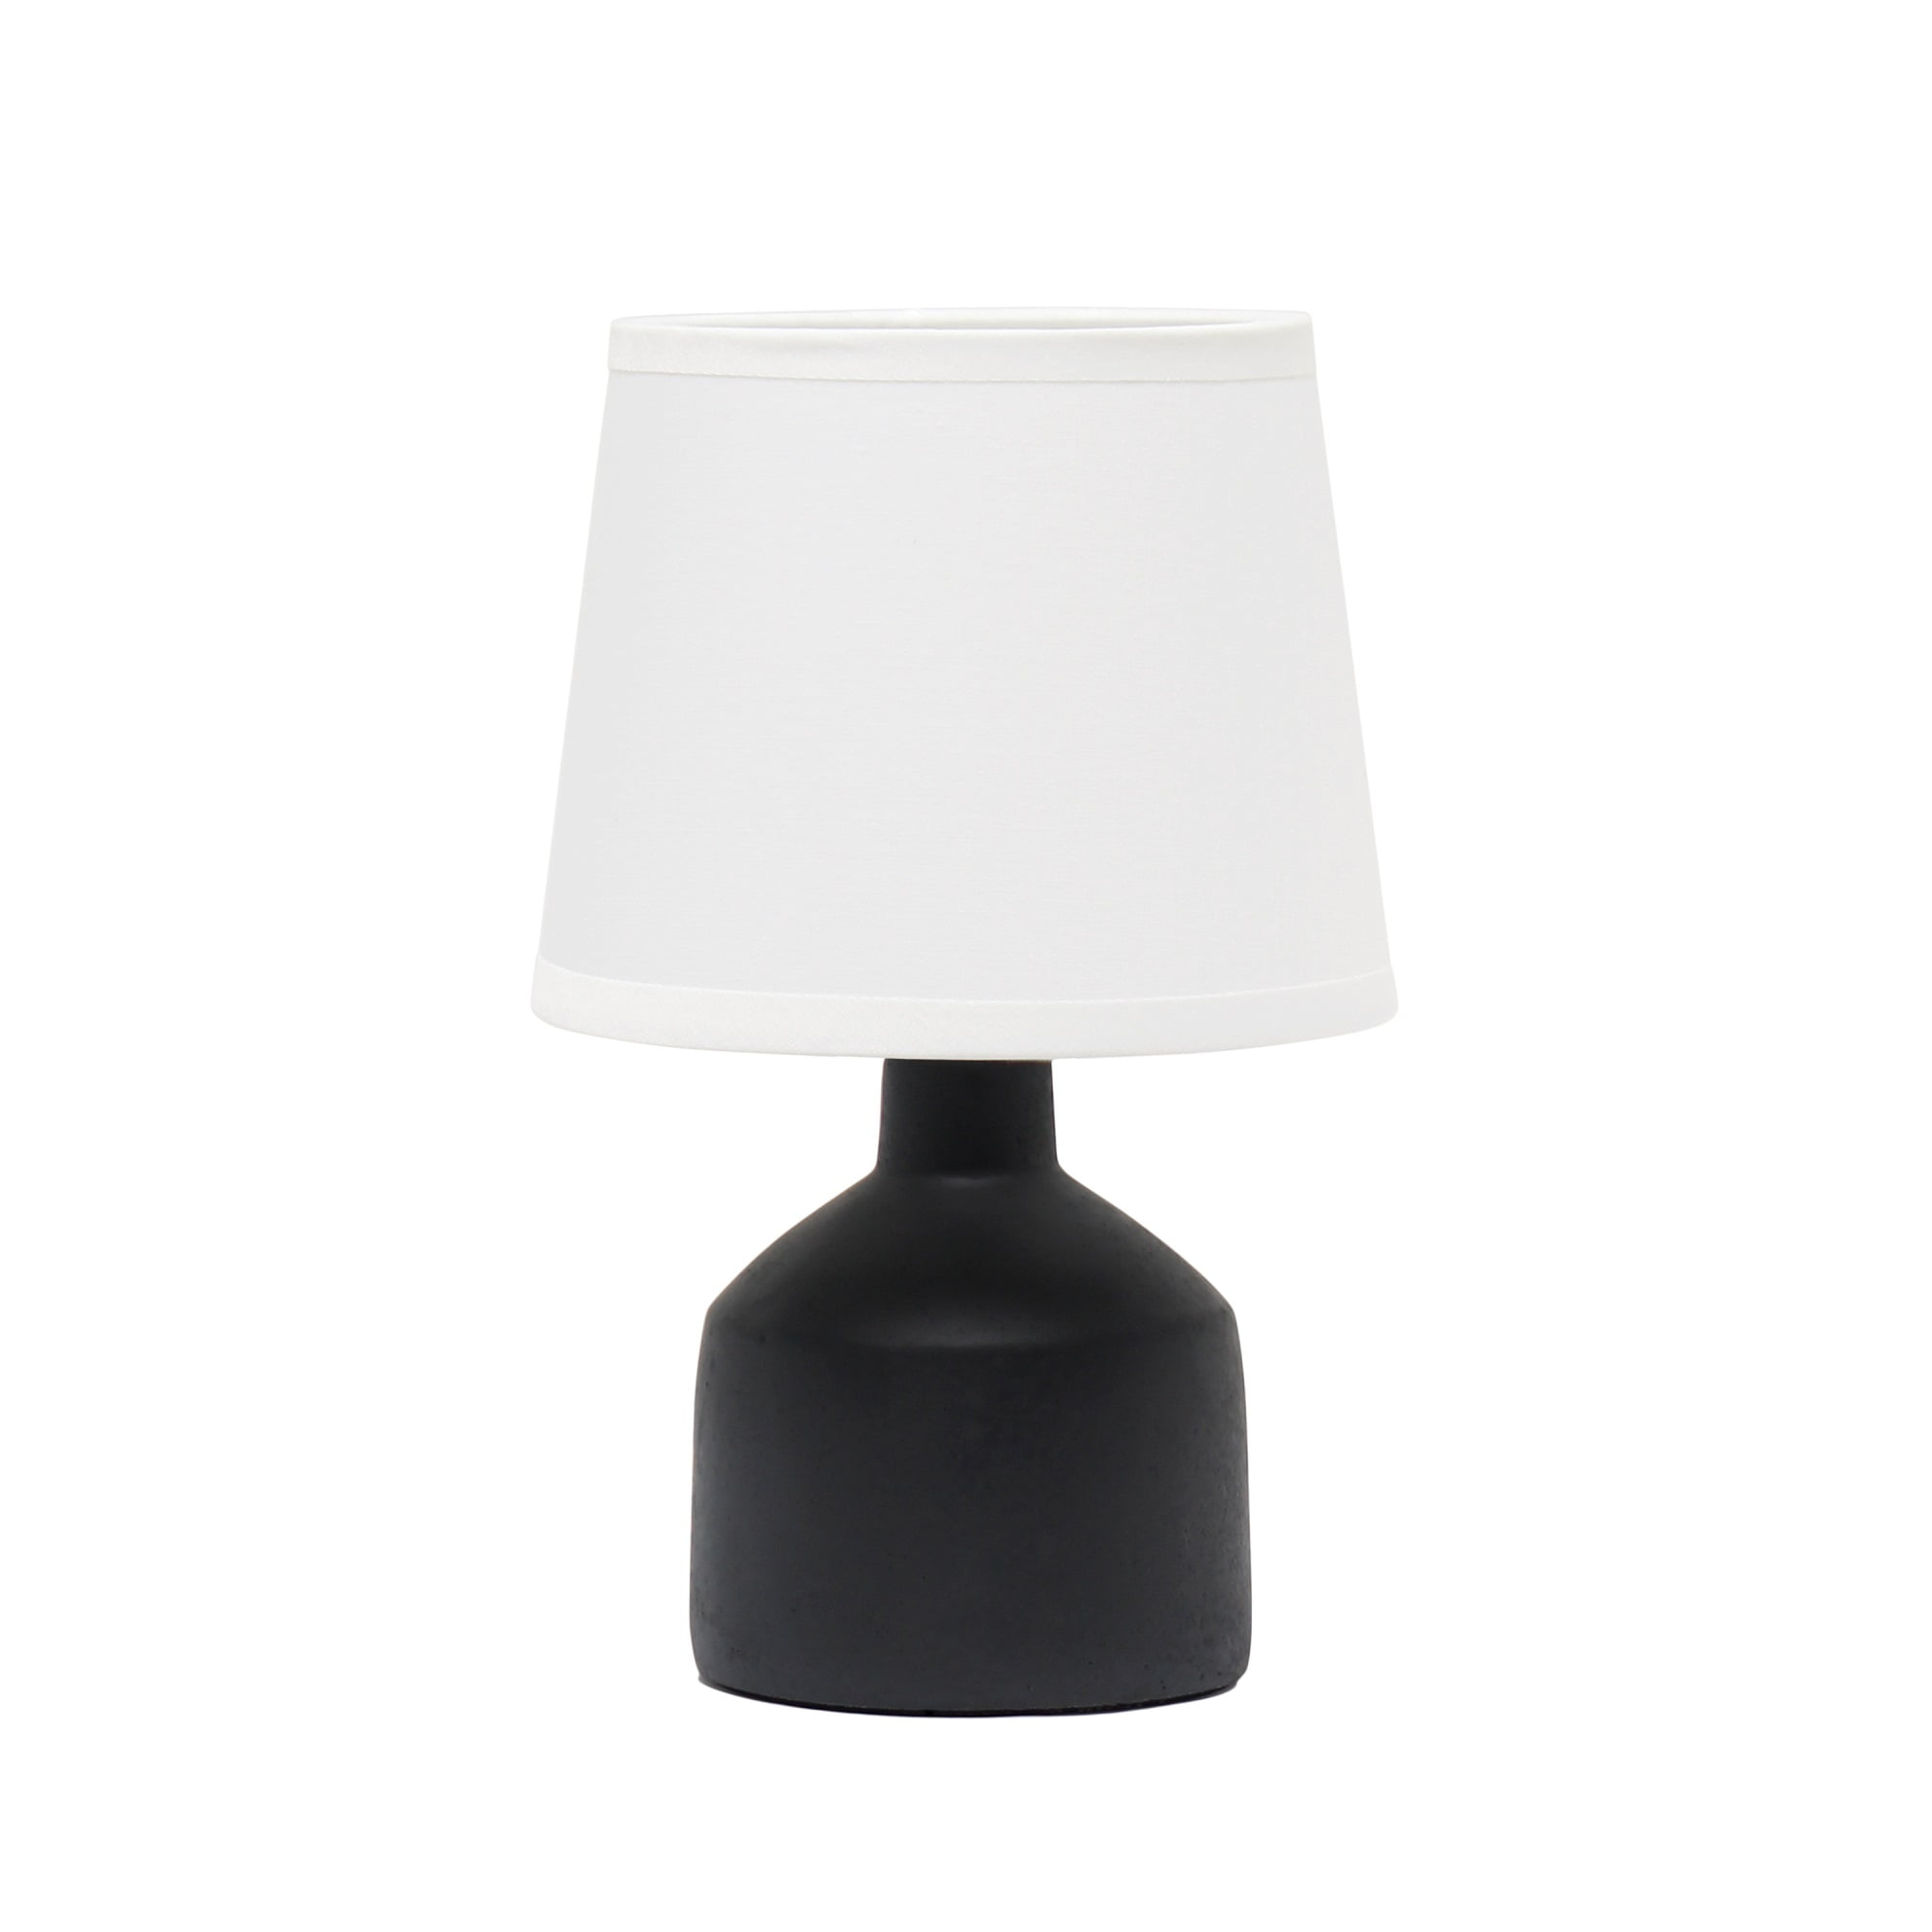 Simple Designs Mini Bocksbeutal Ceramic Table Lamp, Black